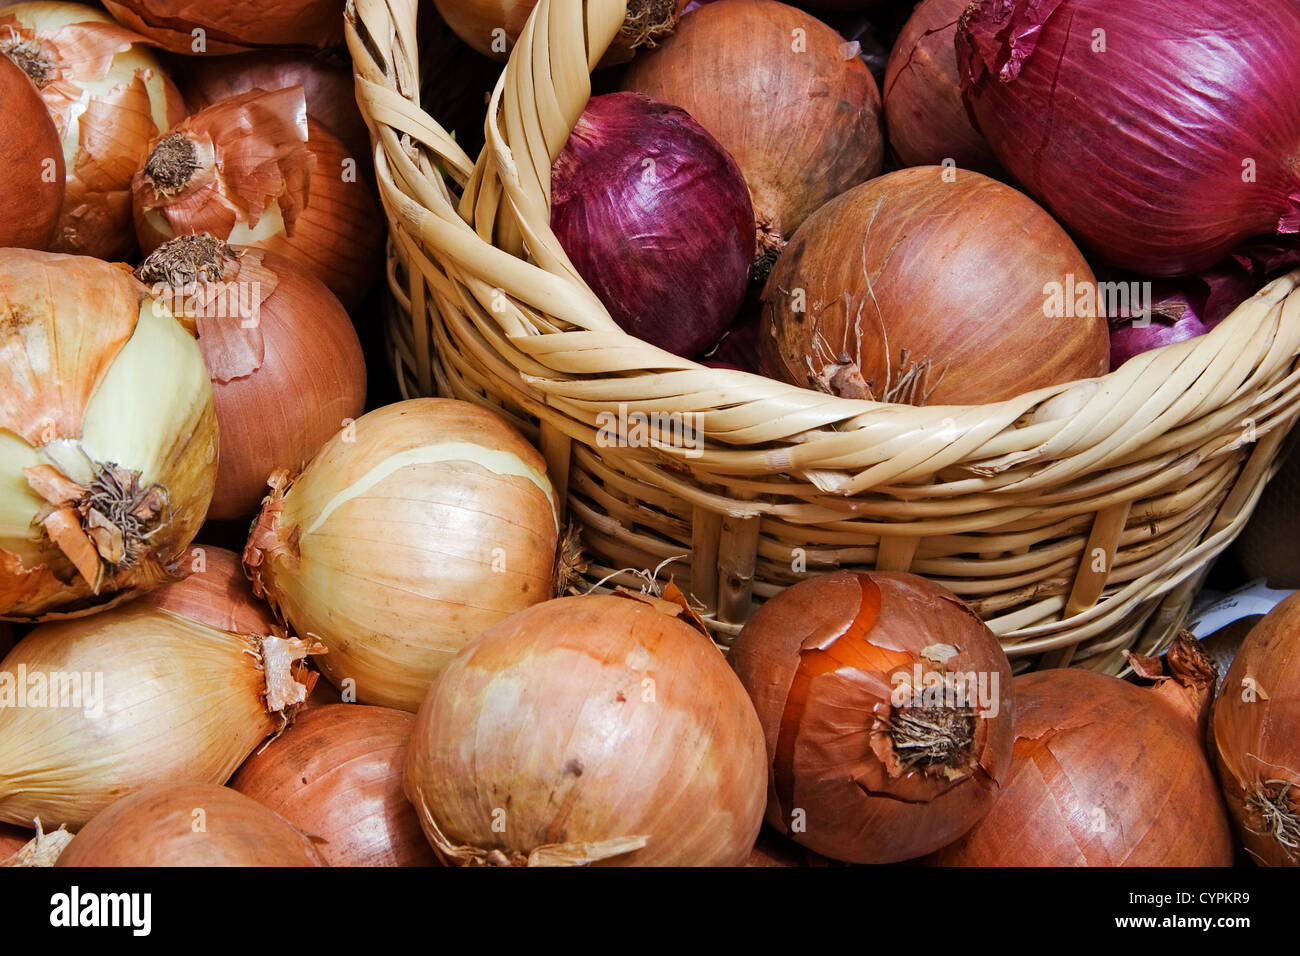 basket of onions growing ecological agriculture cesto de cebollas cultivo agricultura ecologica Stock Photo